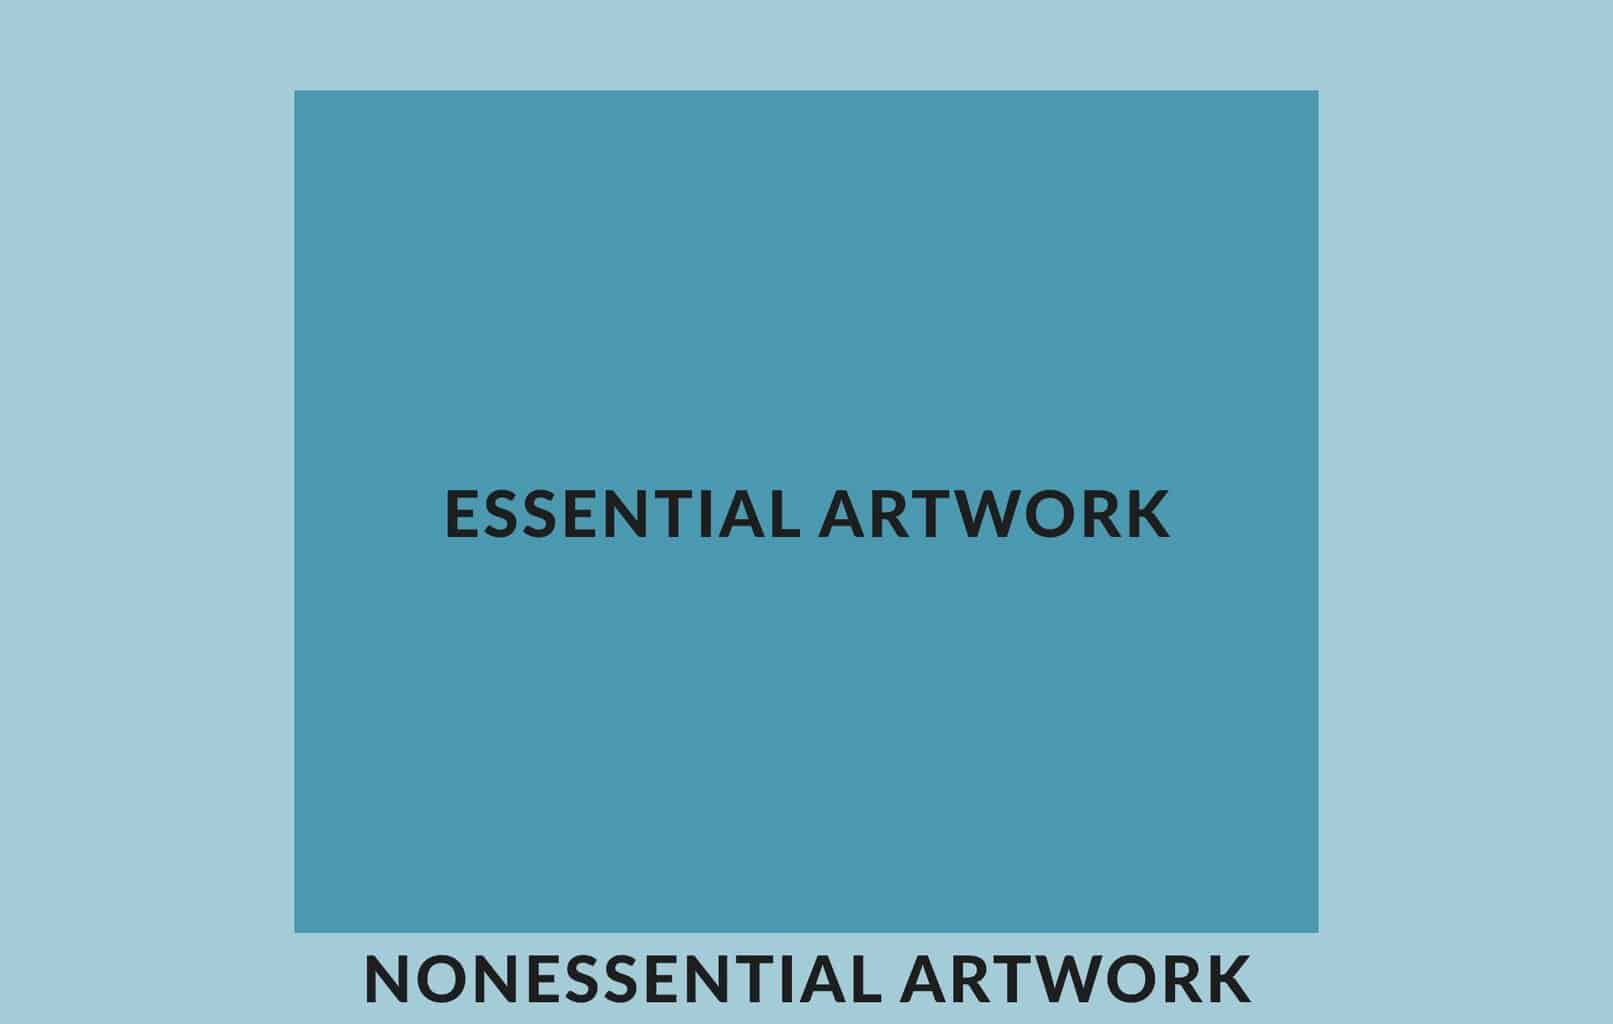 Showing essential vs. non-essential artwork areas